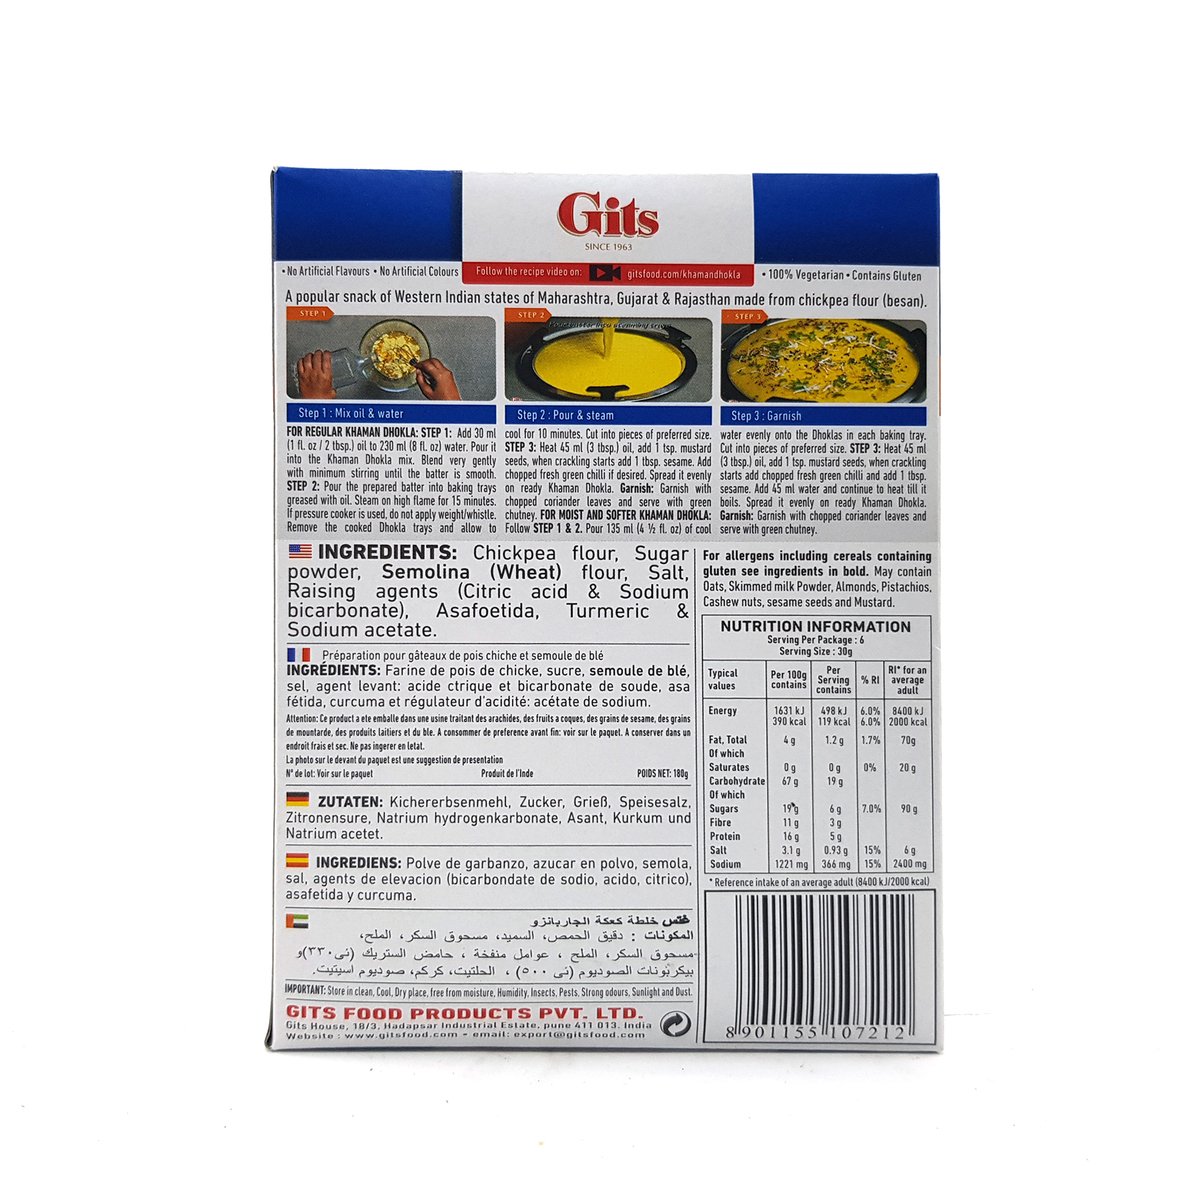 Gits Khaman Dhokla Snack Mix 180 g